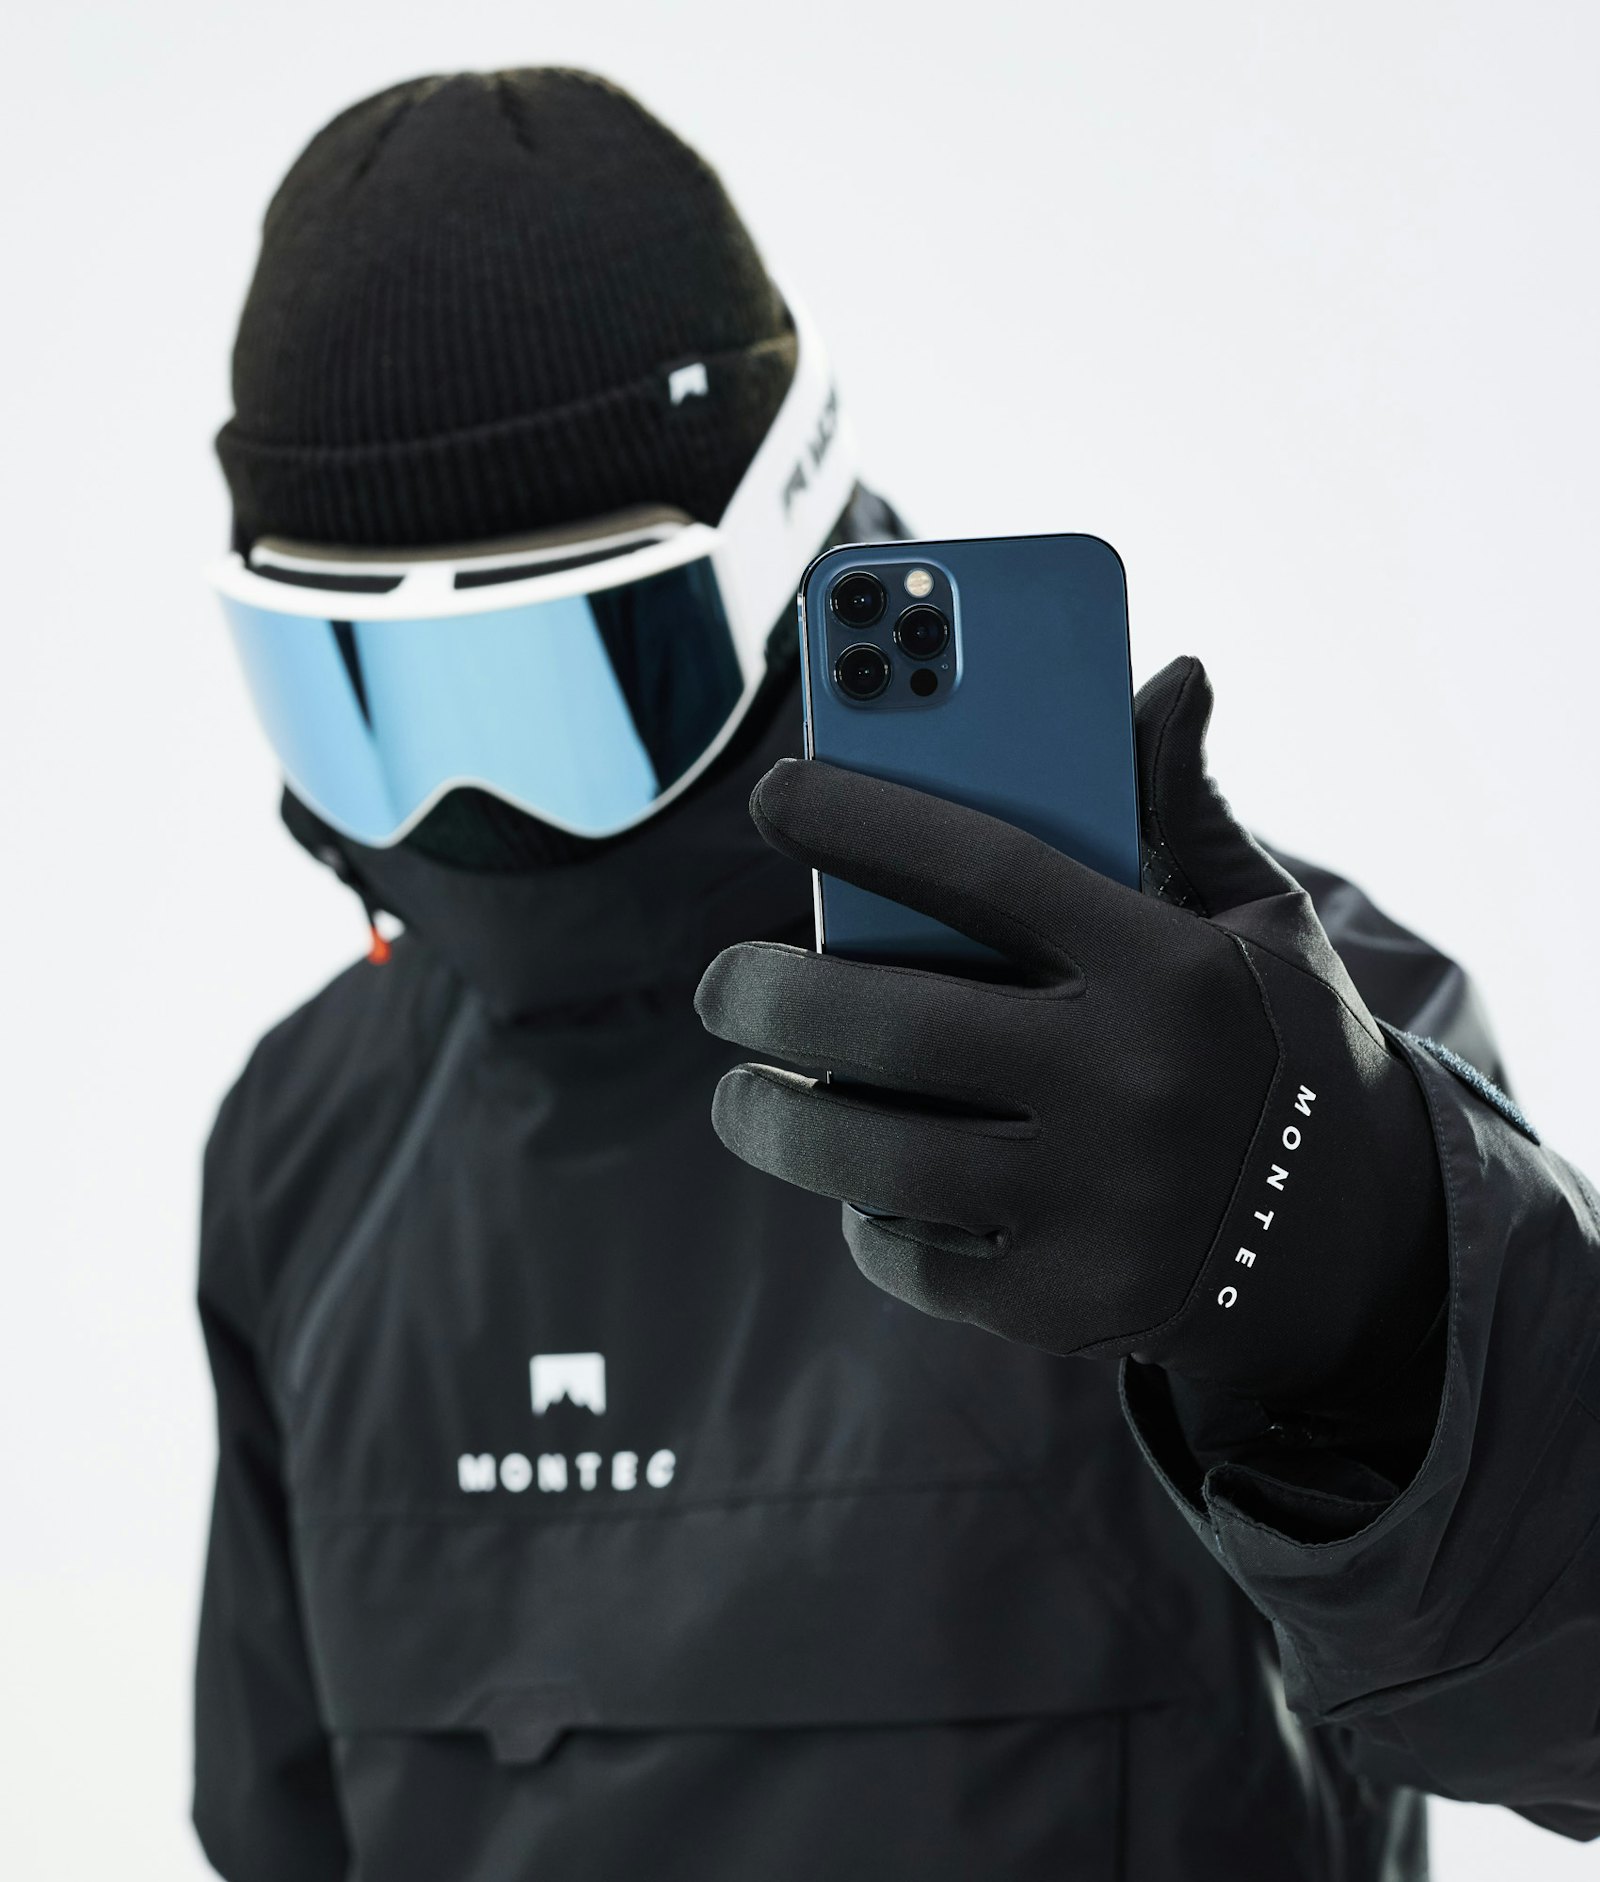 Utility 2021 Ski Gloves Black/White, Image 3 of 4